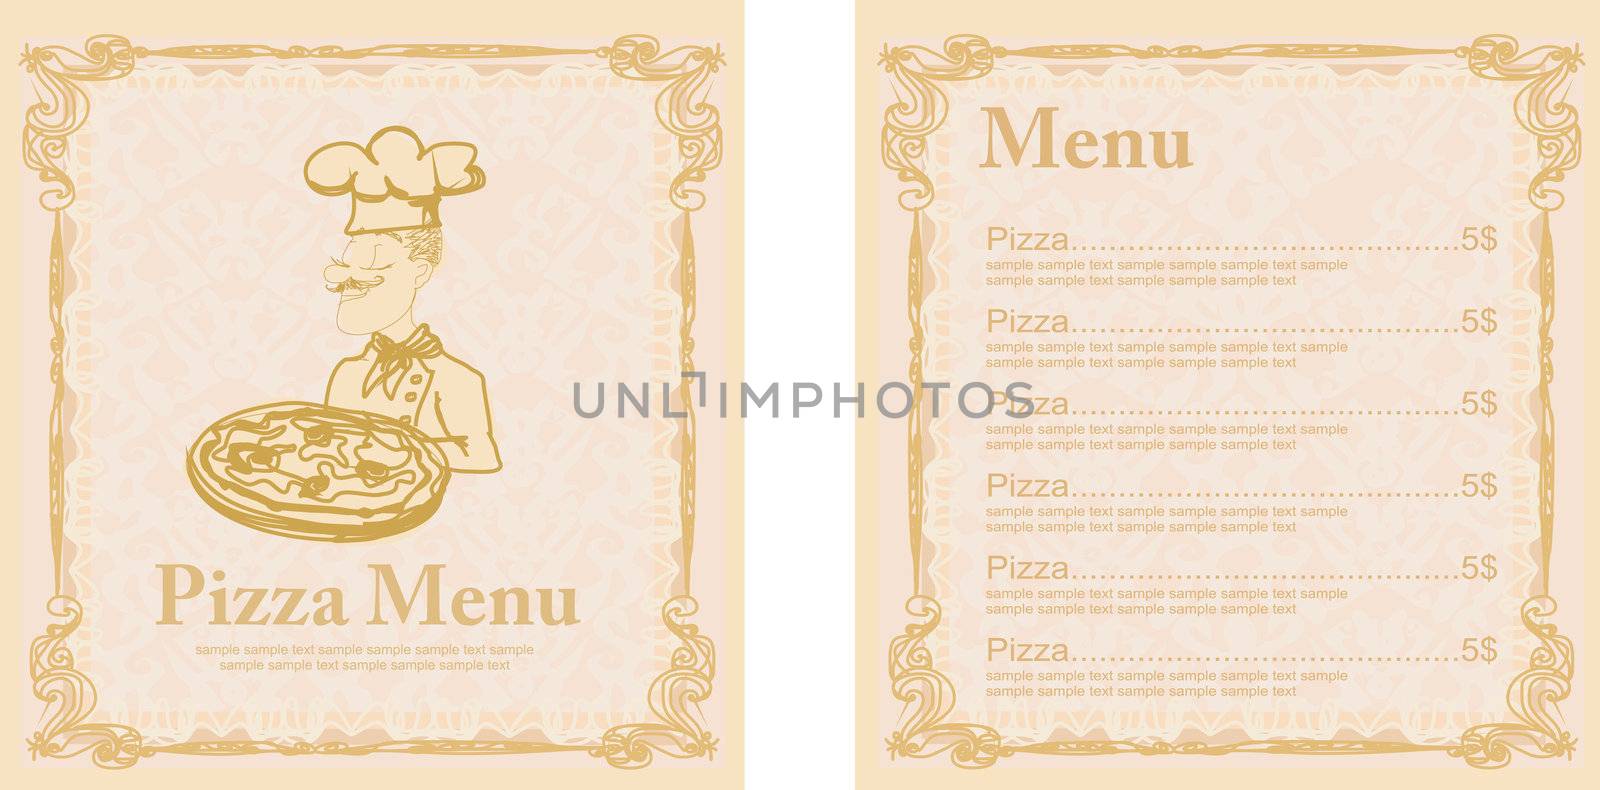 Pizza Menu Template by JackyBrown